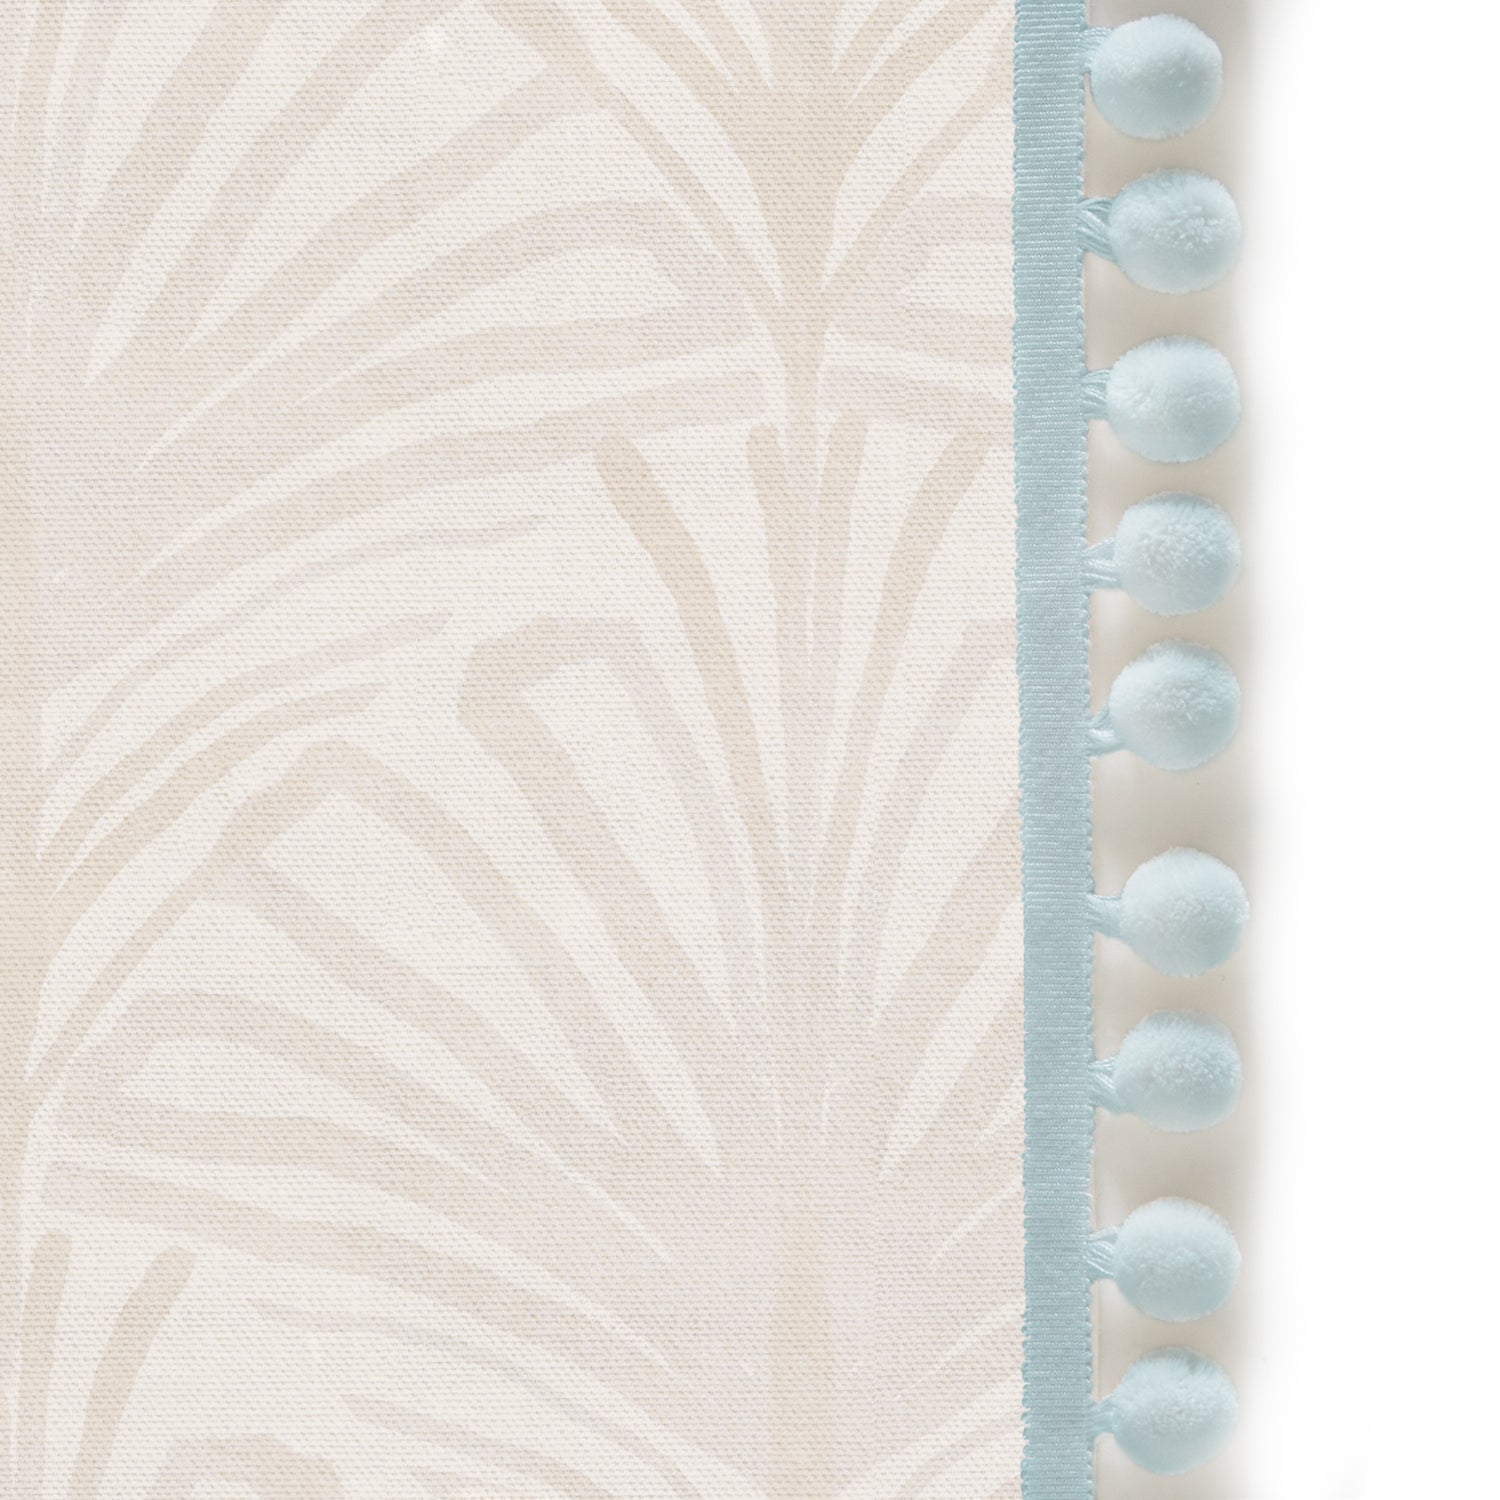 Upclose picture of Suzy Sand custom Beige Palmshower curtain with powder pom pom trim